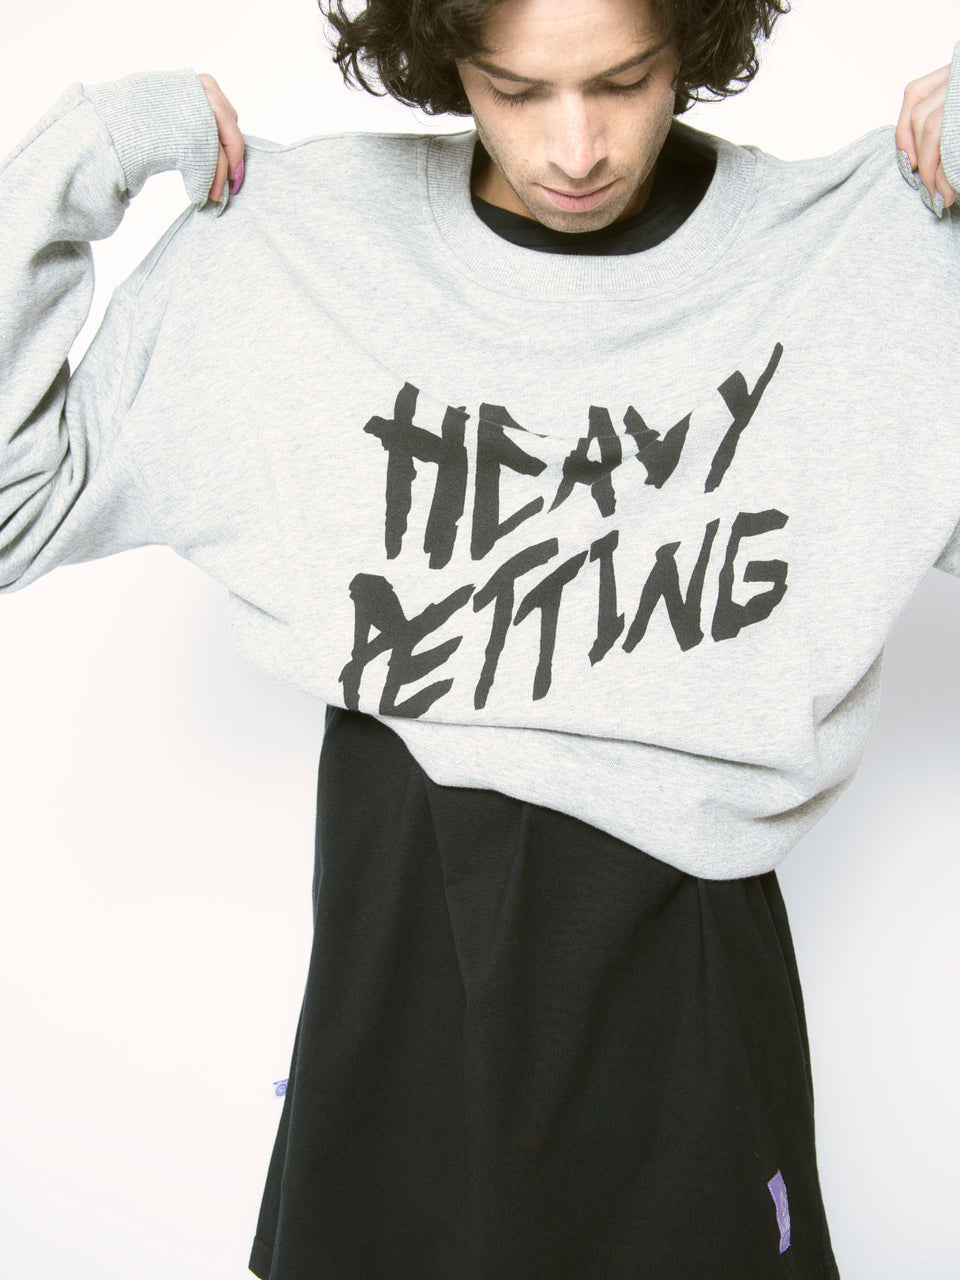 the heavy petting - sweater - unisex